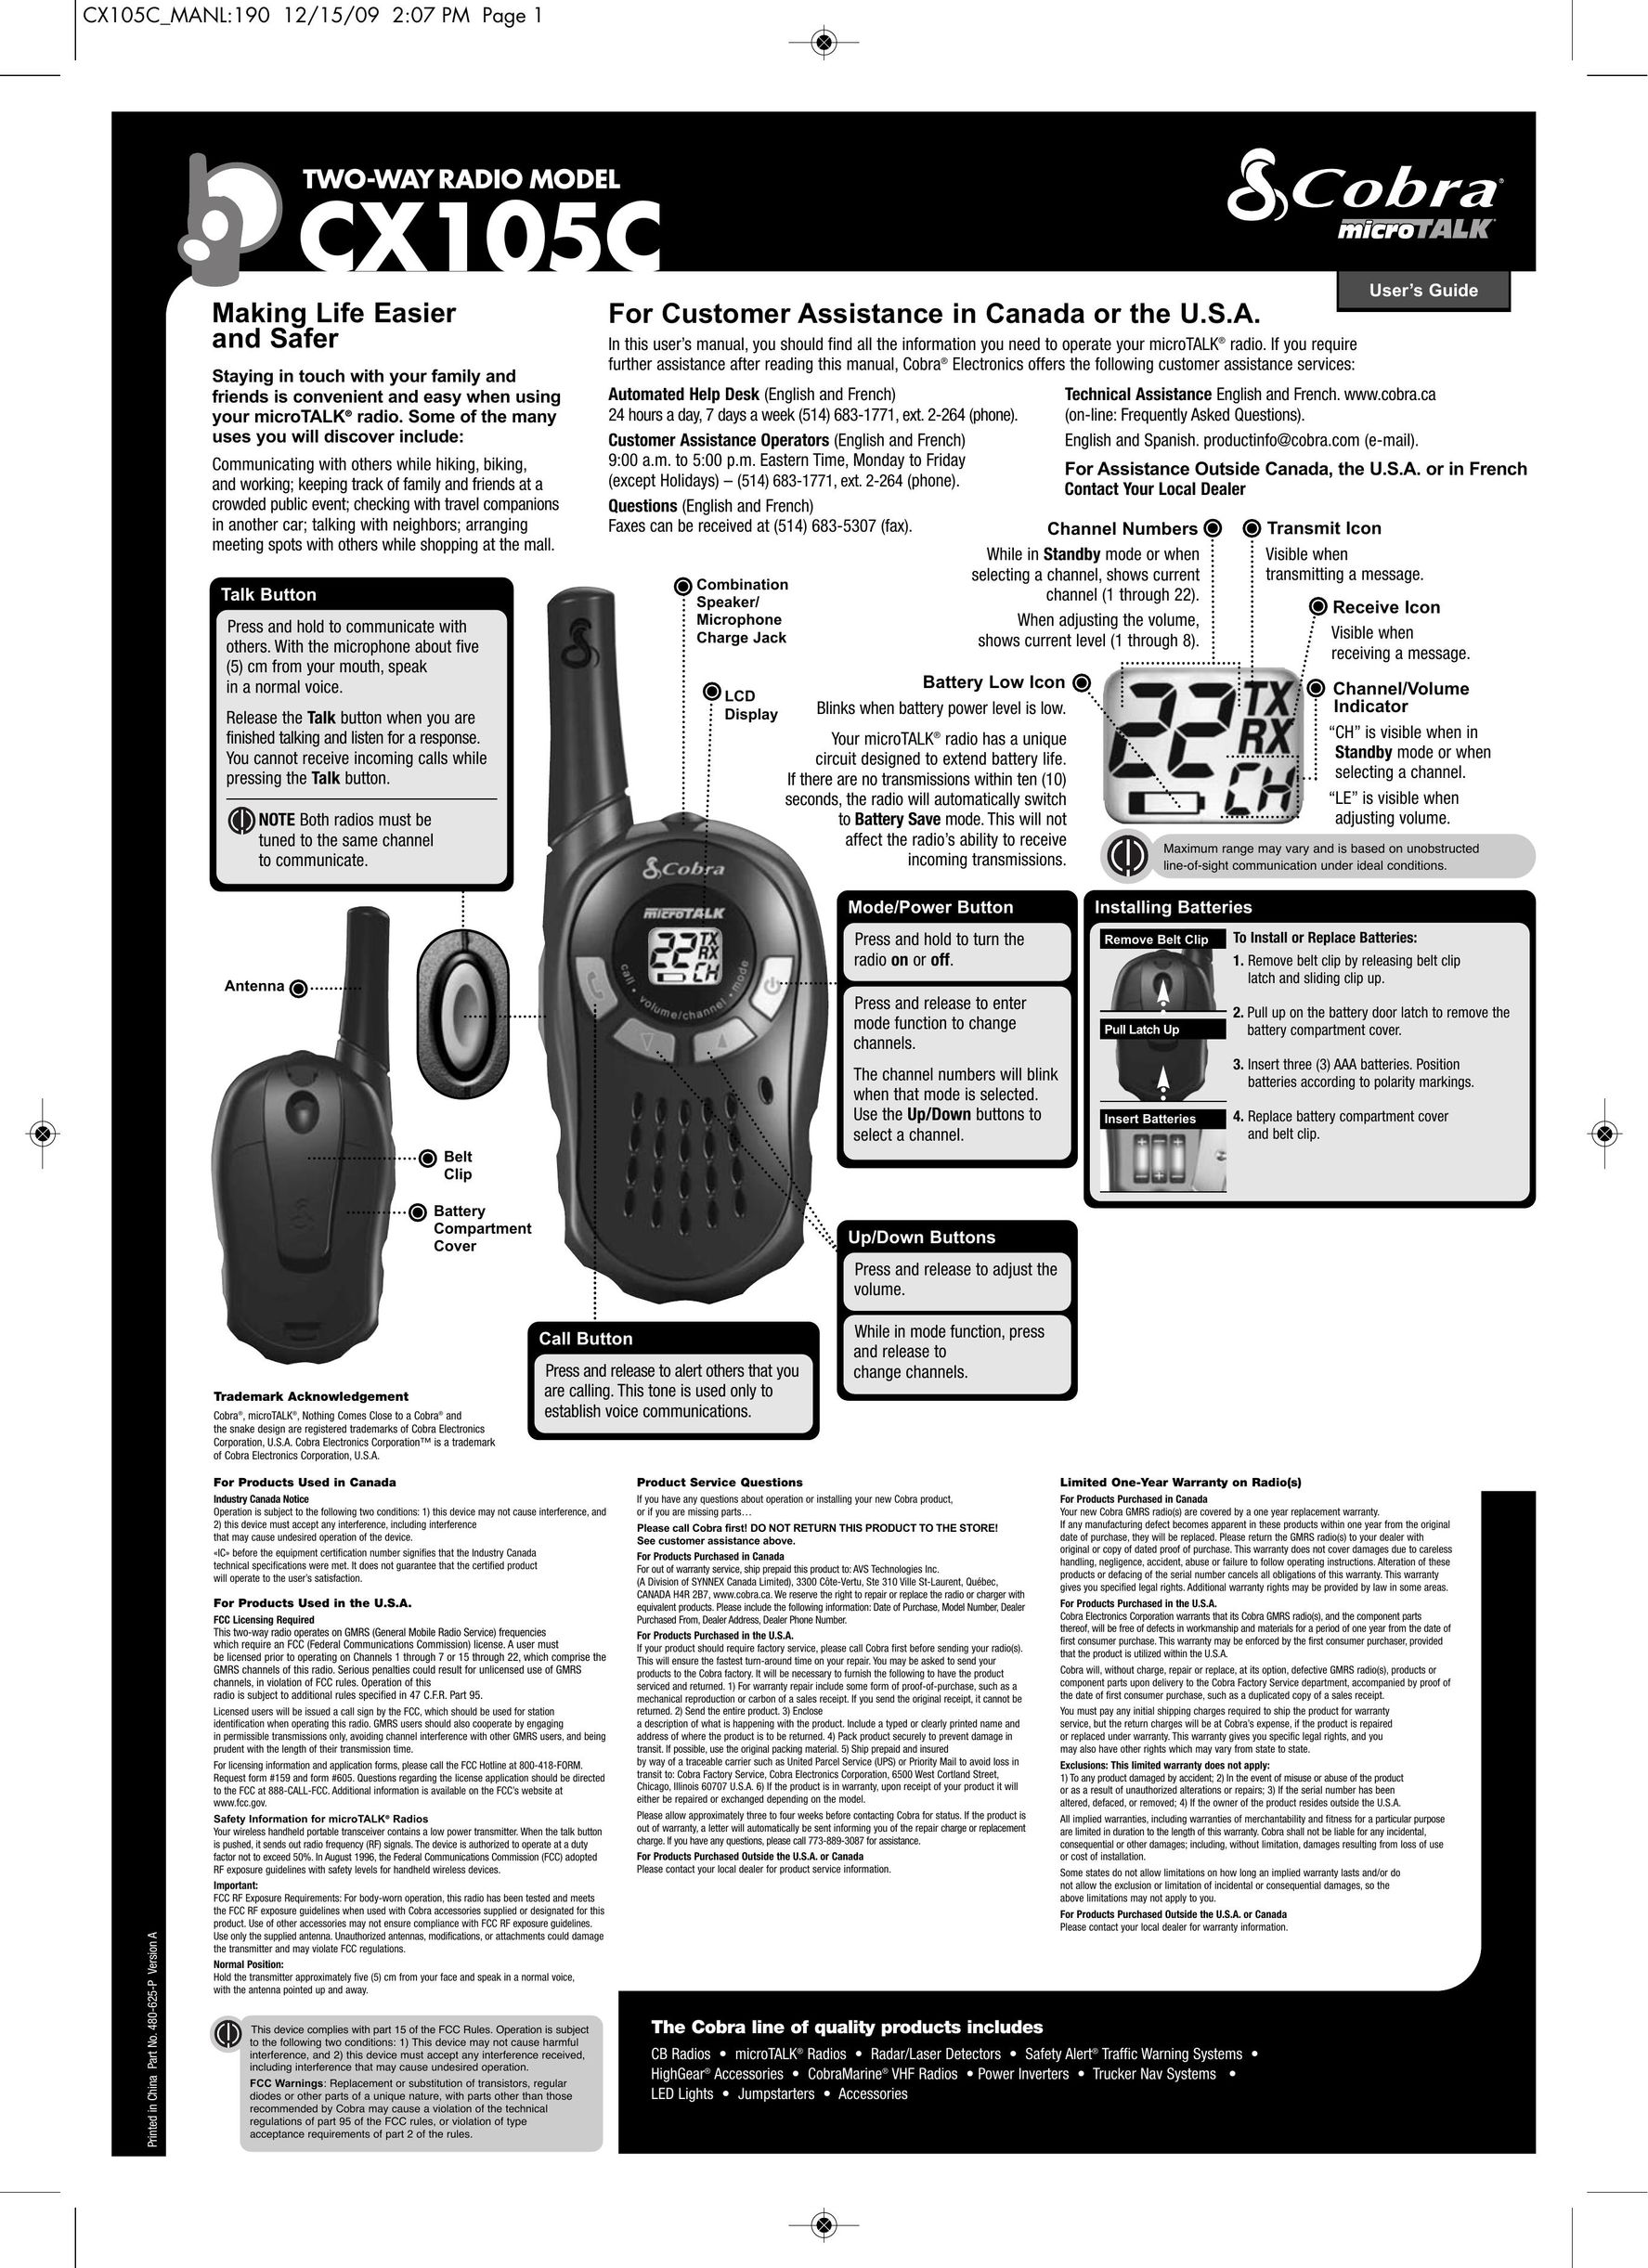 Cobra Electronics CX105C Two-Way Radio User Manual